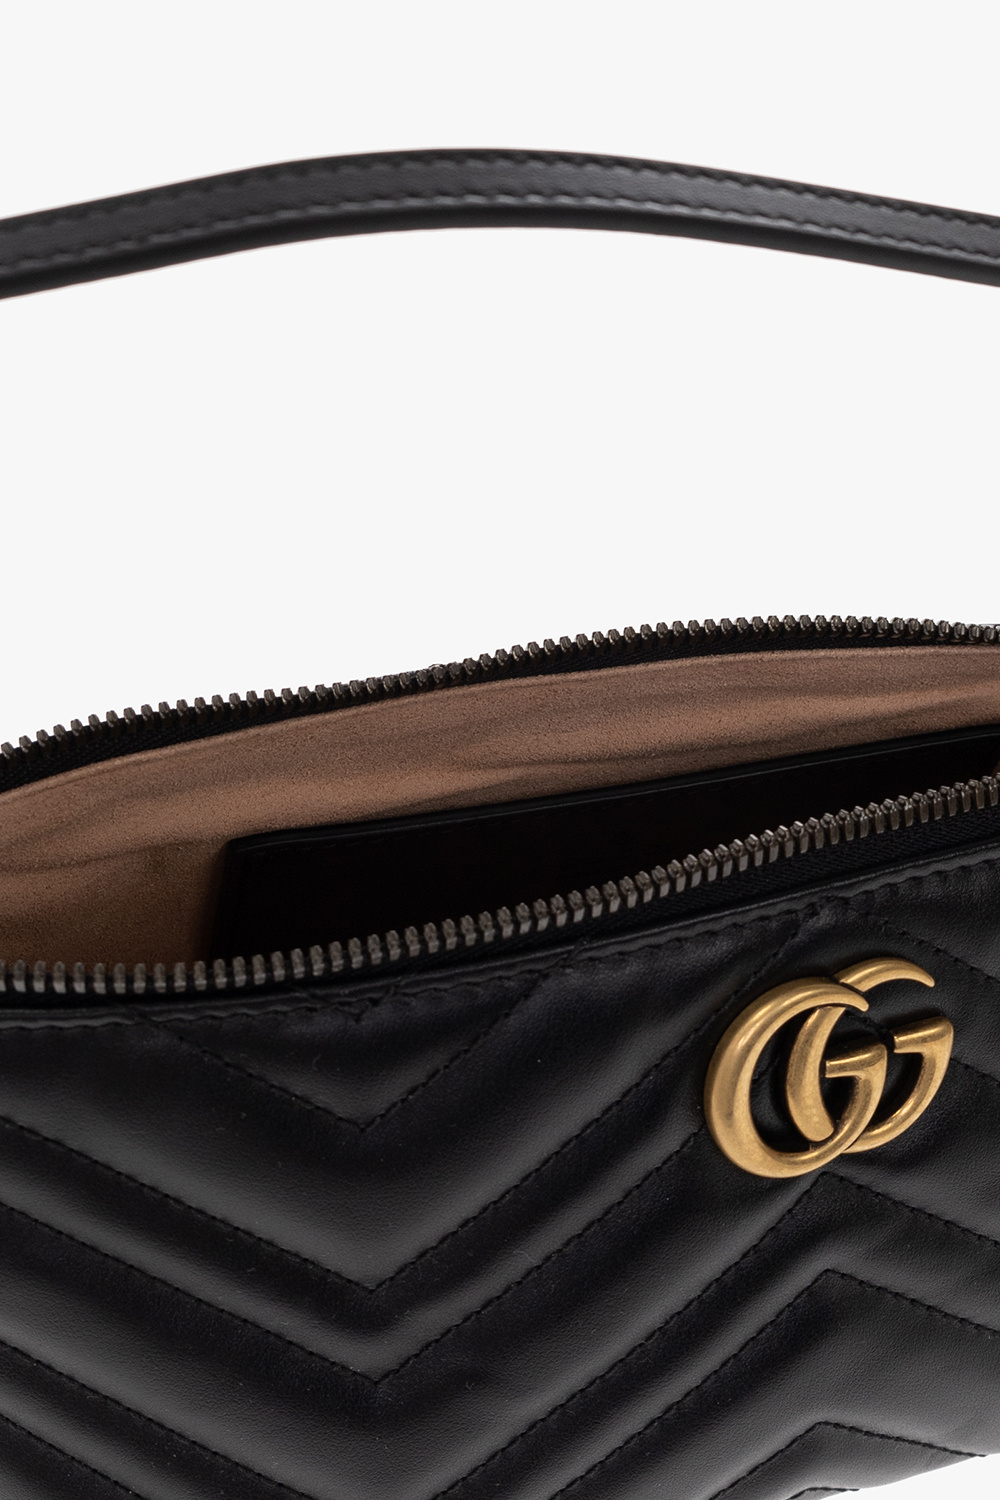 gucci kort ‘GG Marmont’ quilted handbag